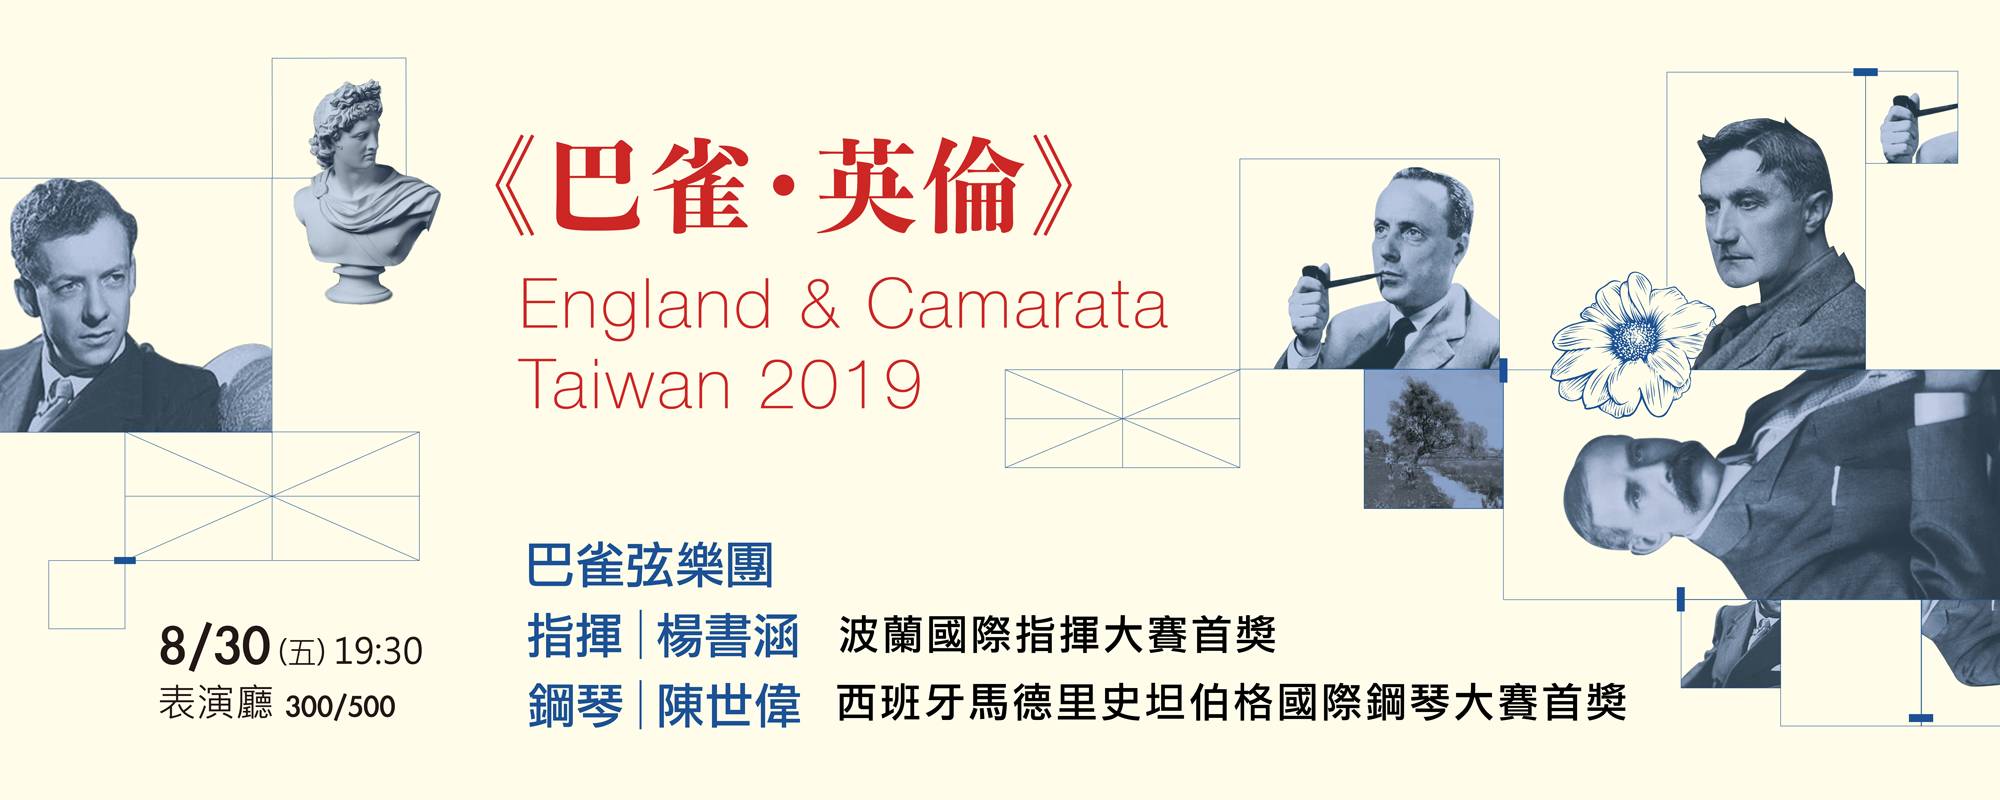 England & Camerata Taiwan